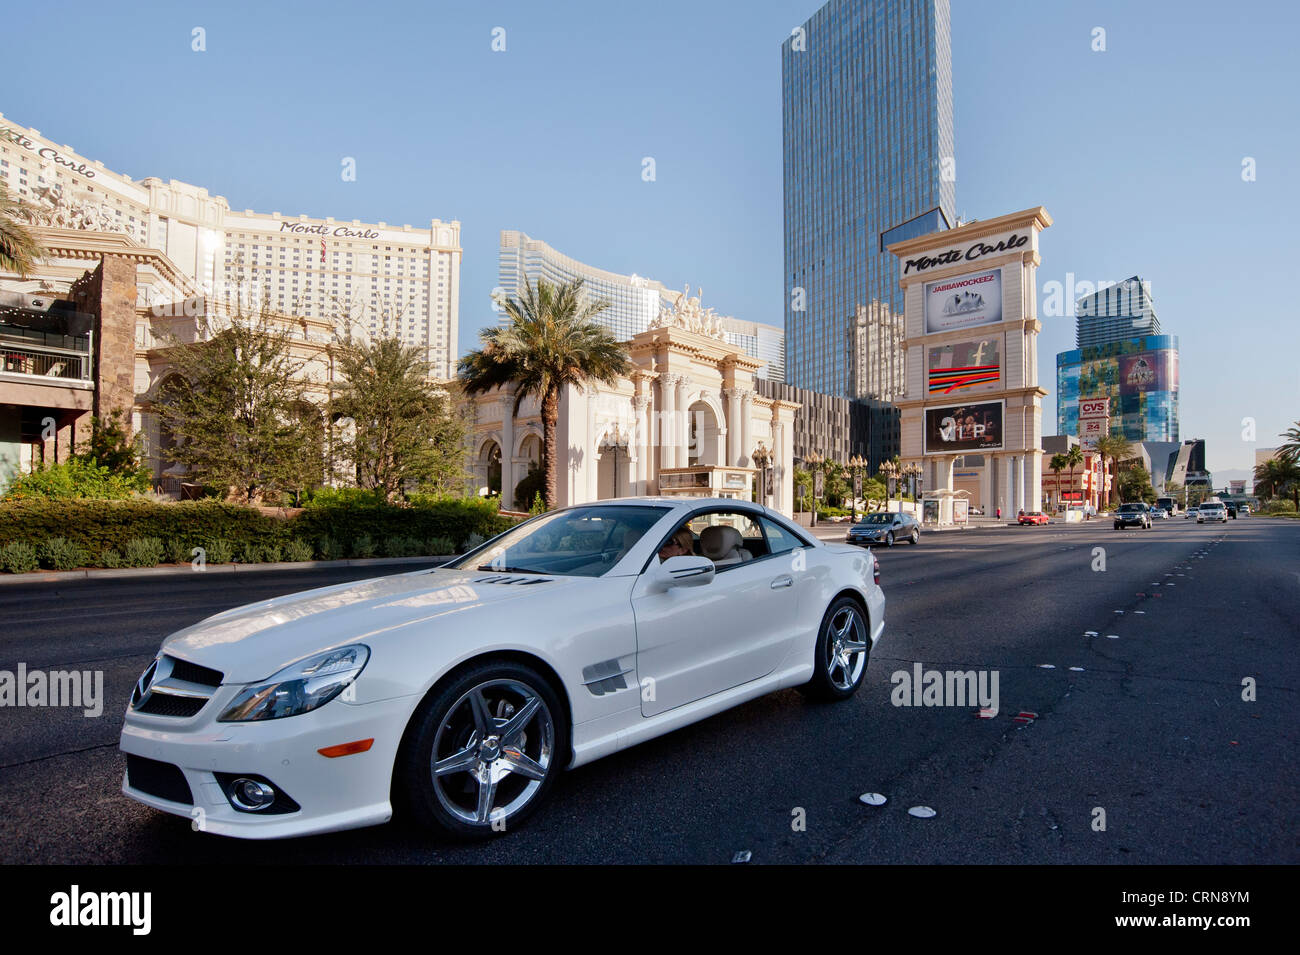 Mercedes Benz Sportwagen Vor Monte Carlo Hotel Am Las Vegas Boulevard Nevada Usa Stockfotografie Alamy